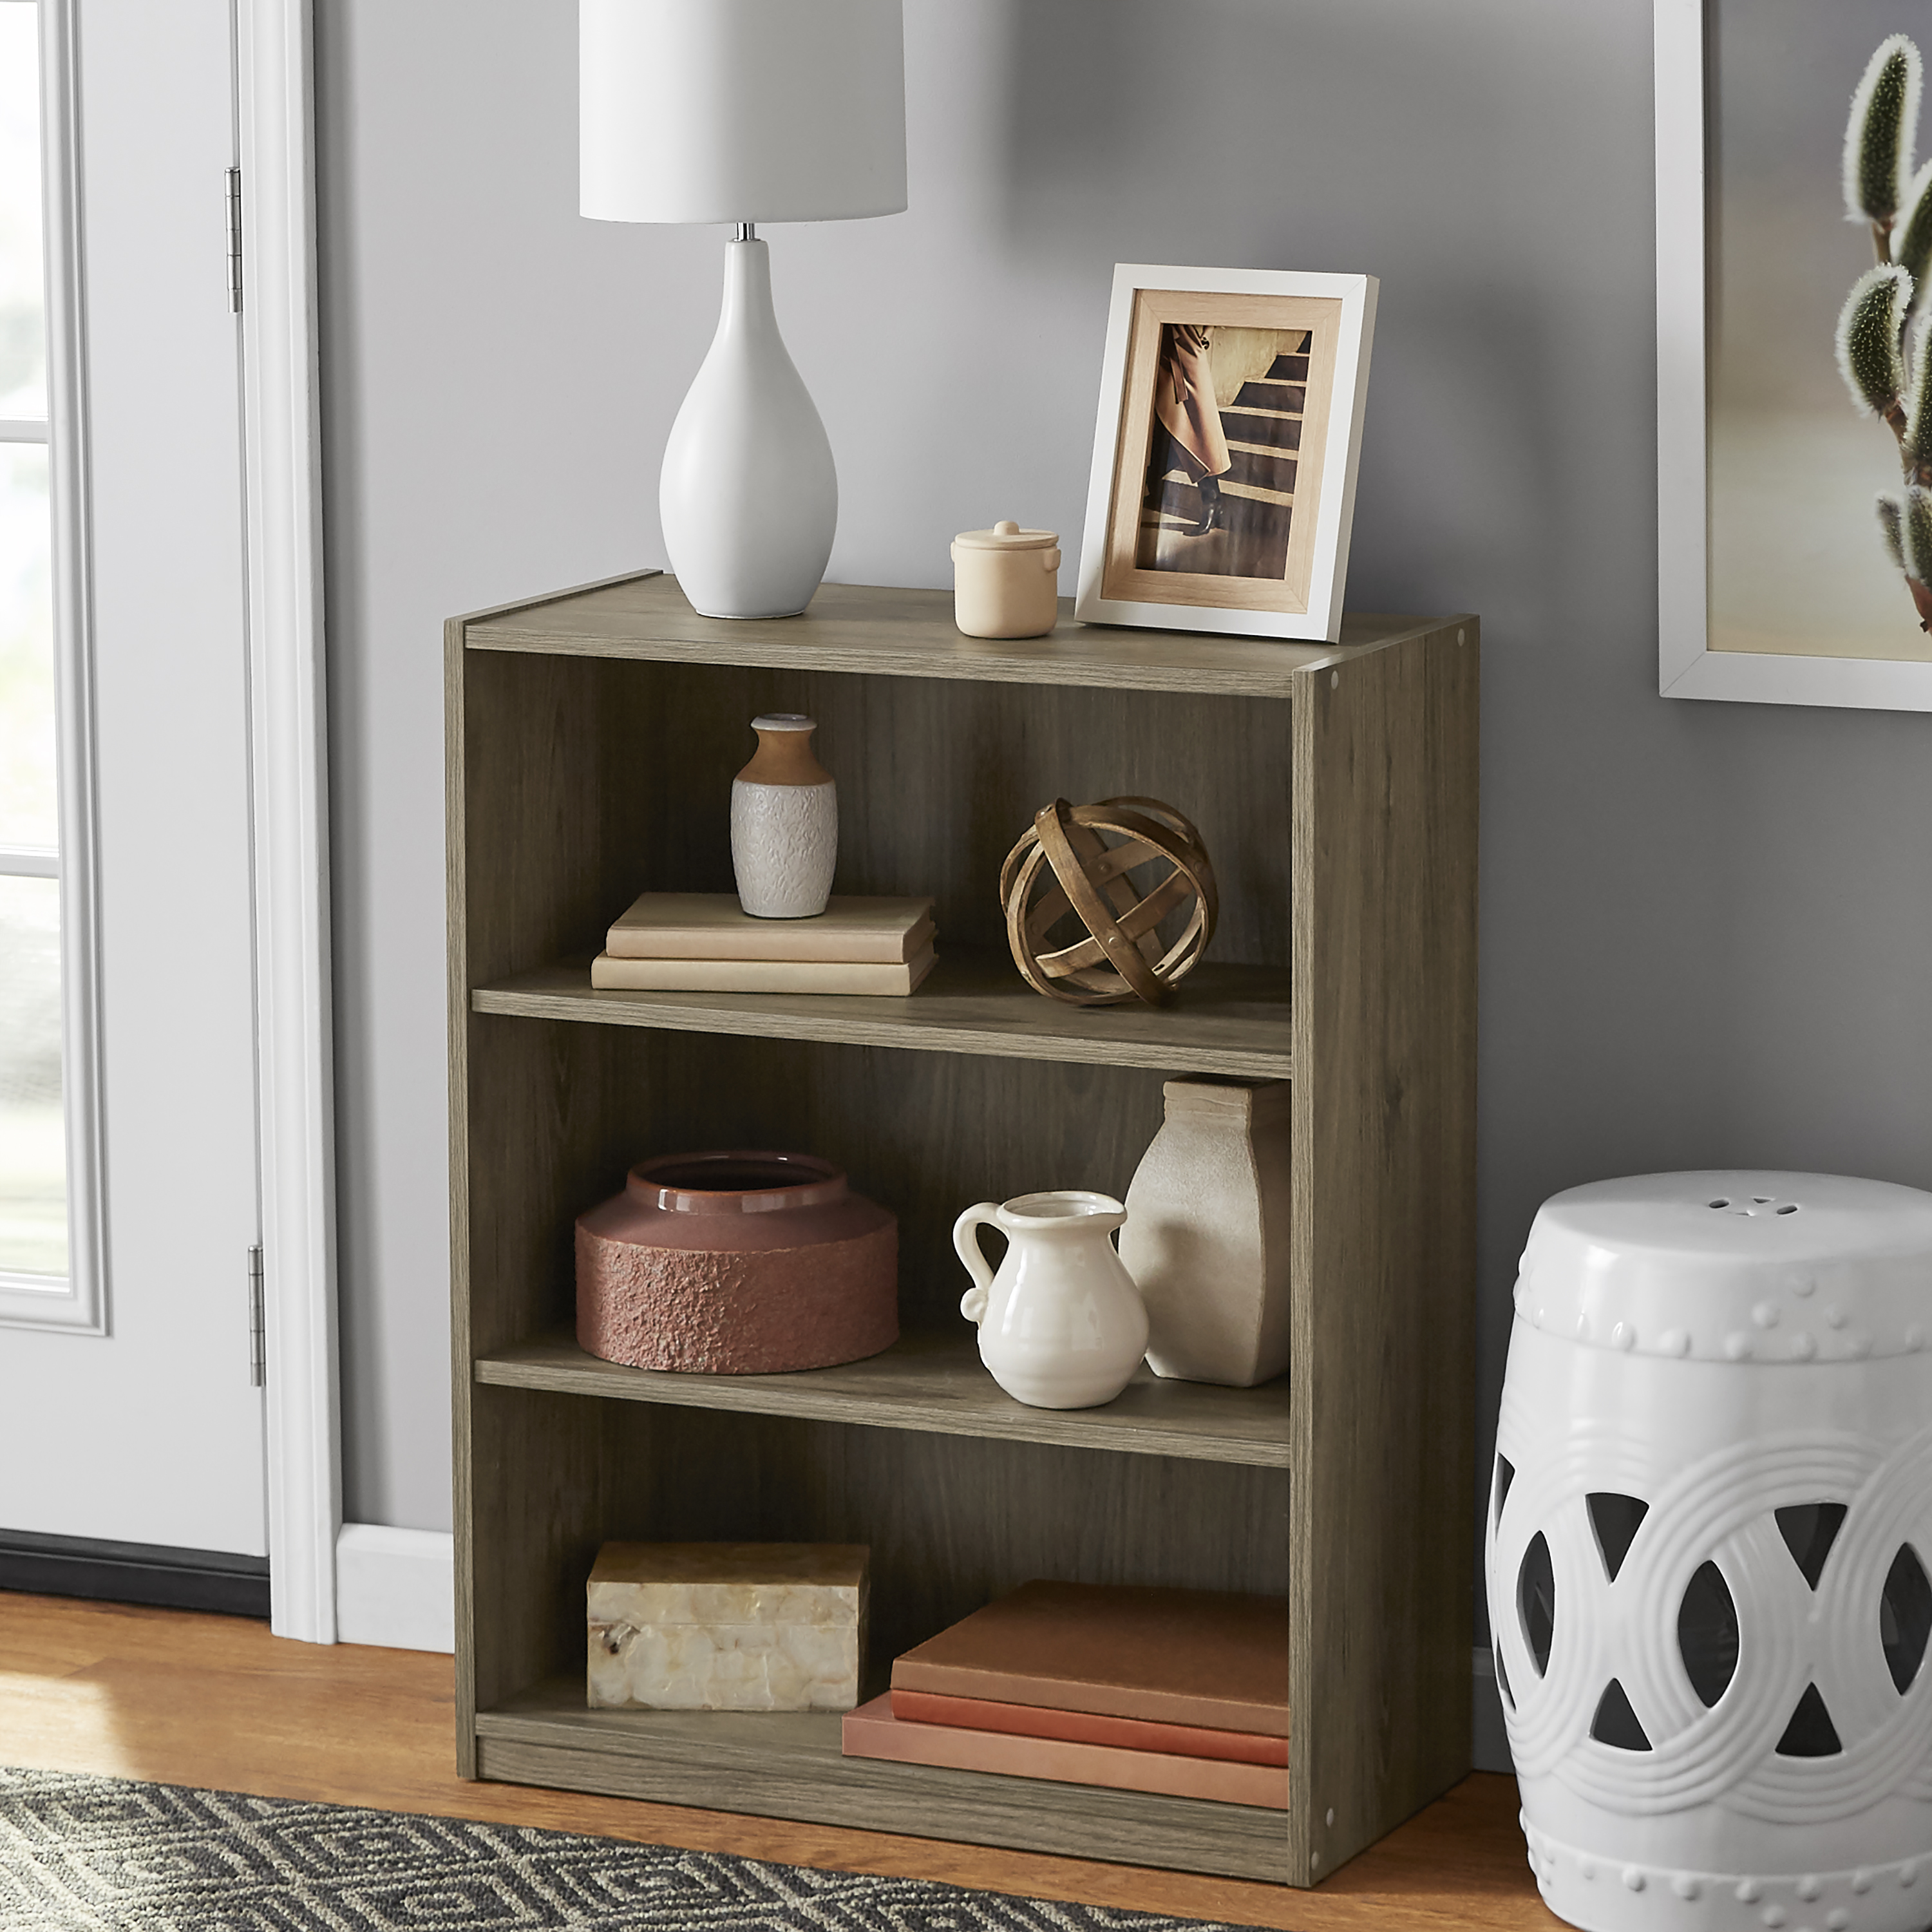 Mainstays 3-Shelf Bookcase with Adjustable Shelves, Rustic Oak - image 1 of 6